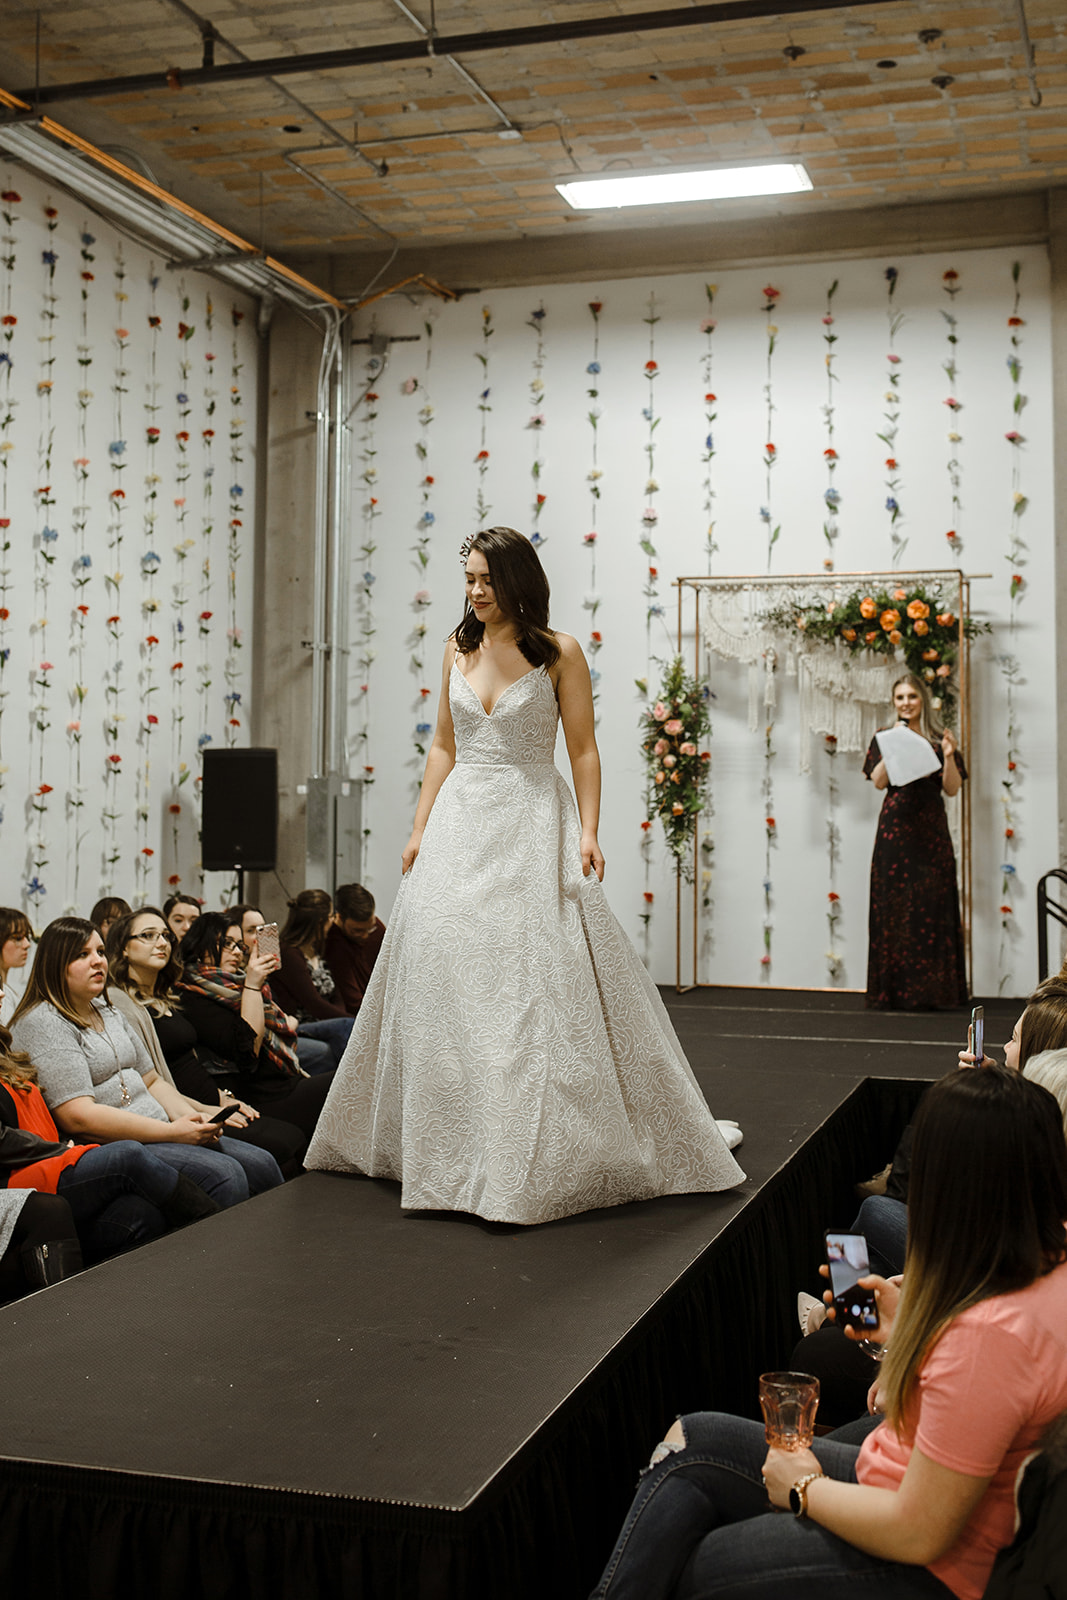 spokane wedding dress fashion show ballgown bridal model